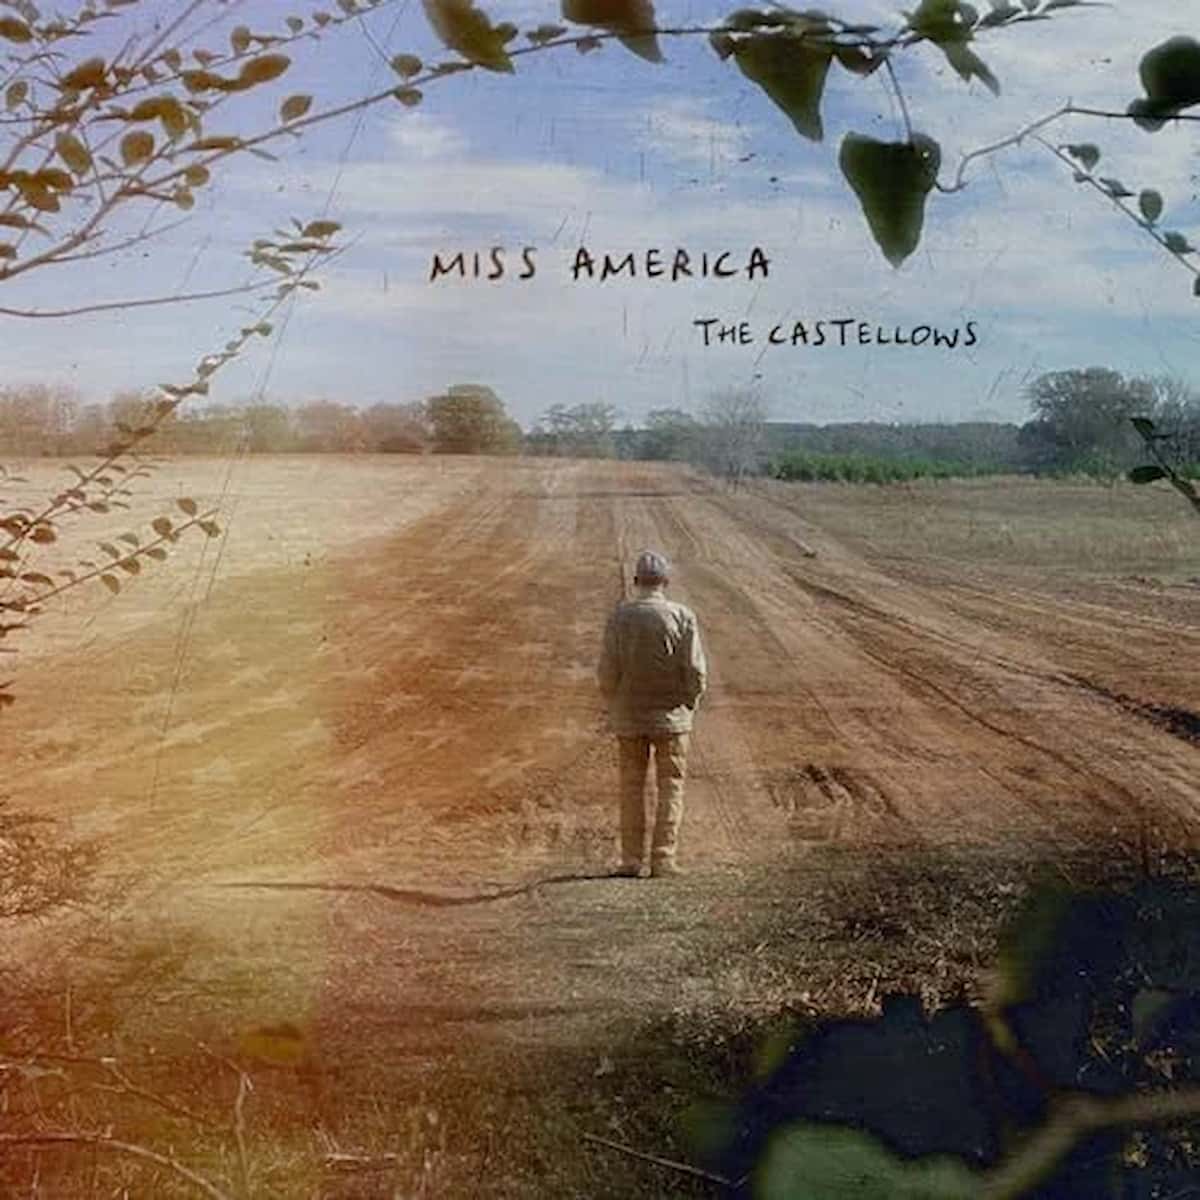 The Castellows Neuer Country-Song “Miss America” - hier im Bild das Cover zur Single